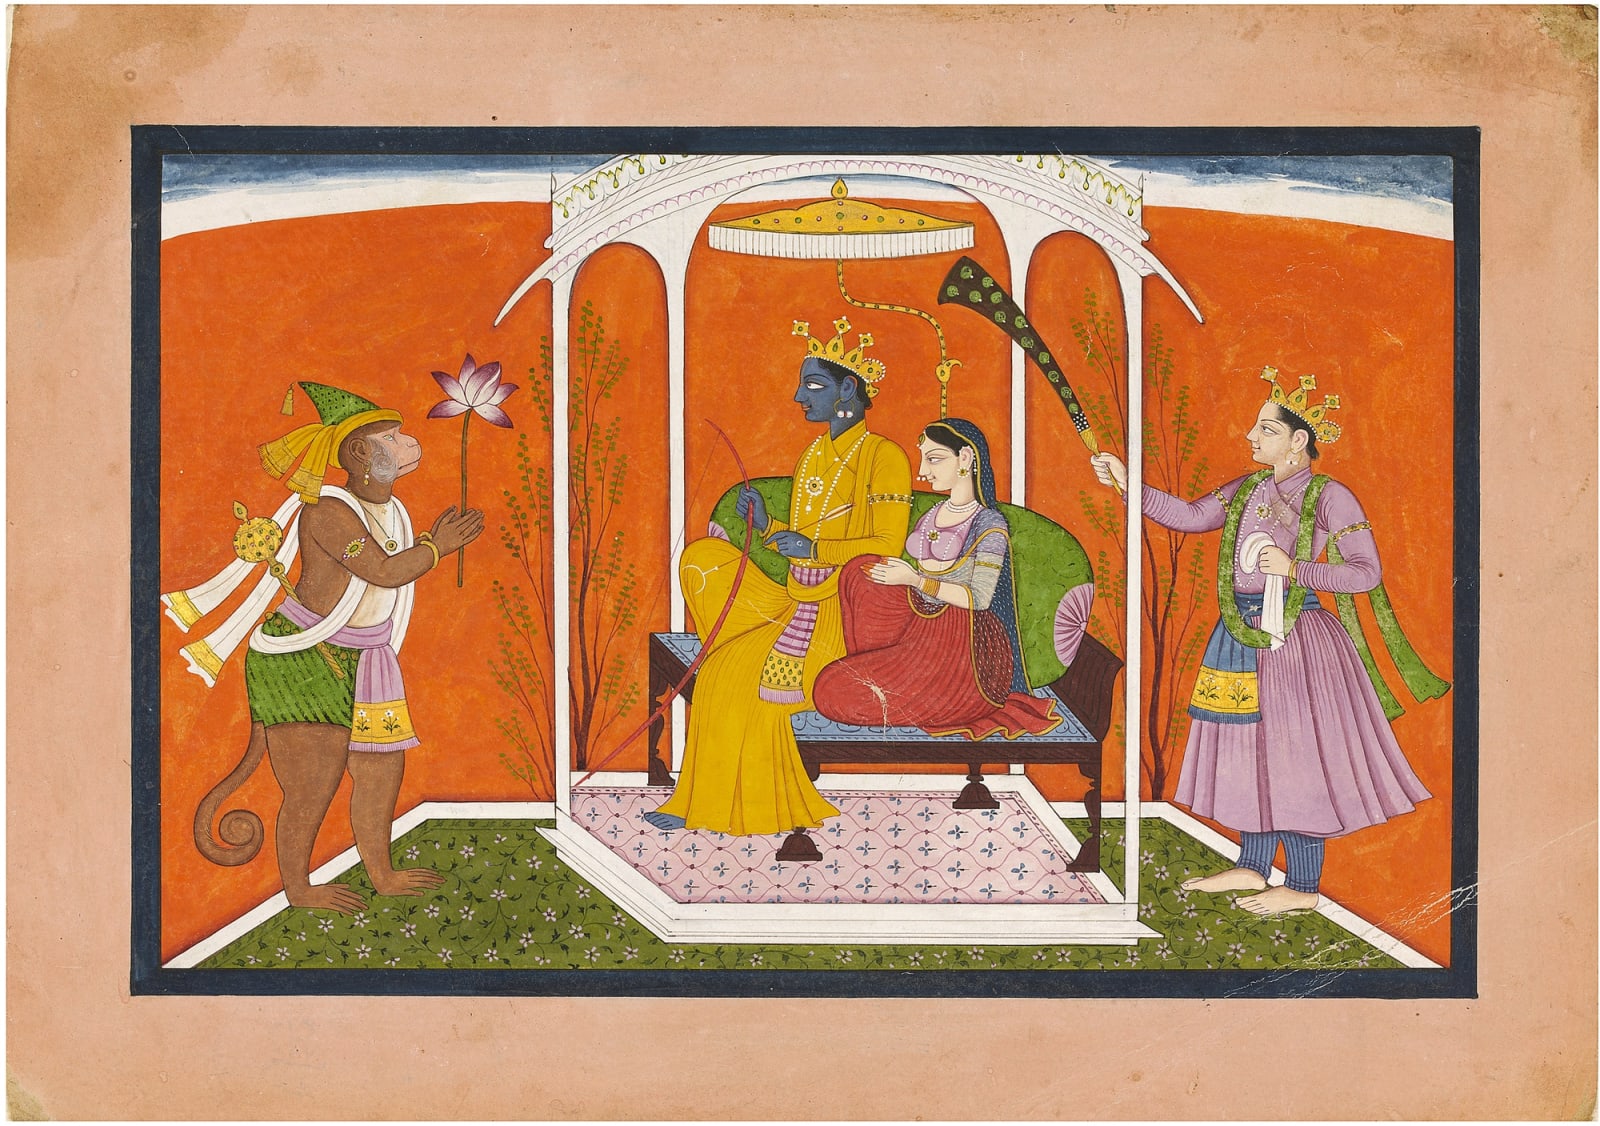 Rama and Sita enthroned with Laksmana and Hanuman, Chamba, c. 1790